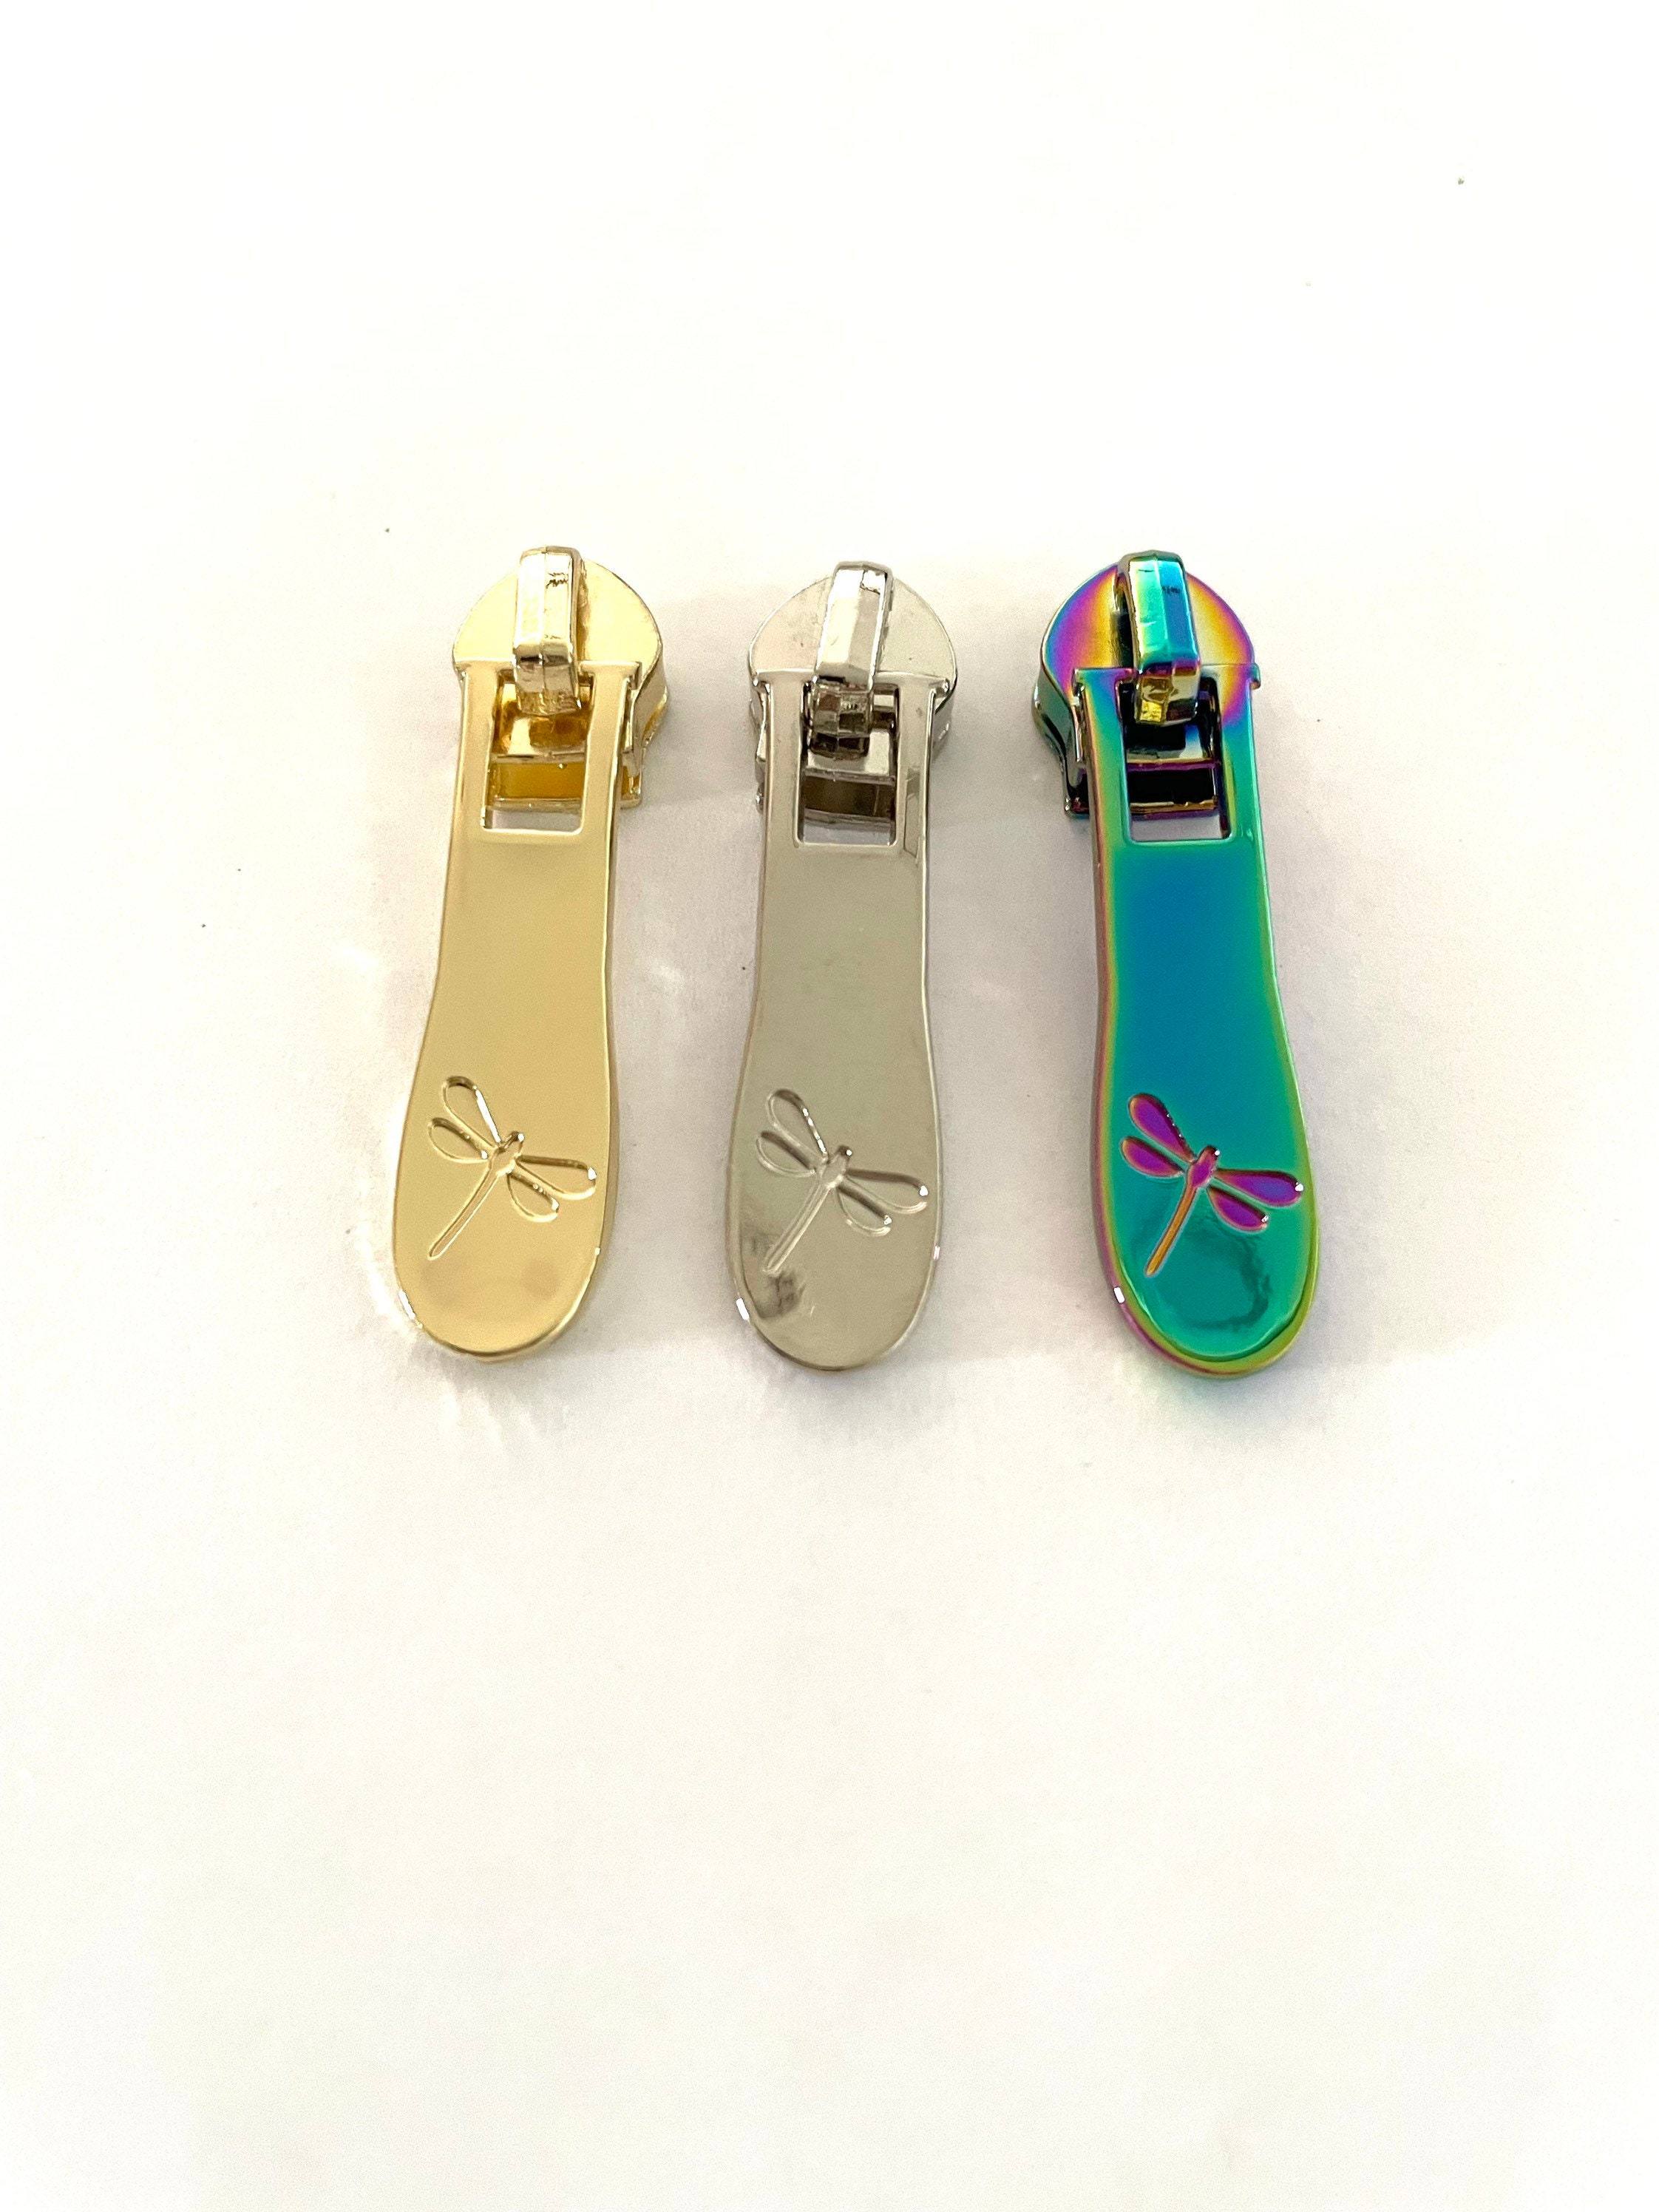 Rainbow Nylon Coil Zipper with Grey Tape & Rainbow Pulls - Zipper by the  Yard - Nylon Coil Zipper - Metallic Zipper